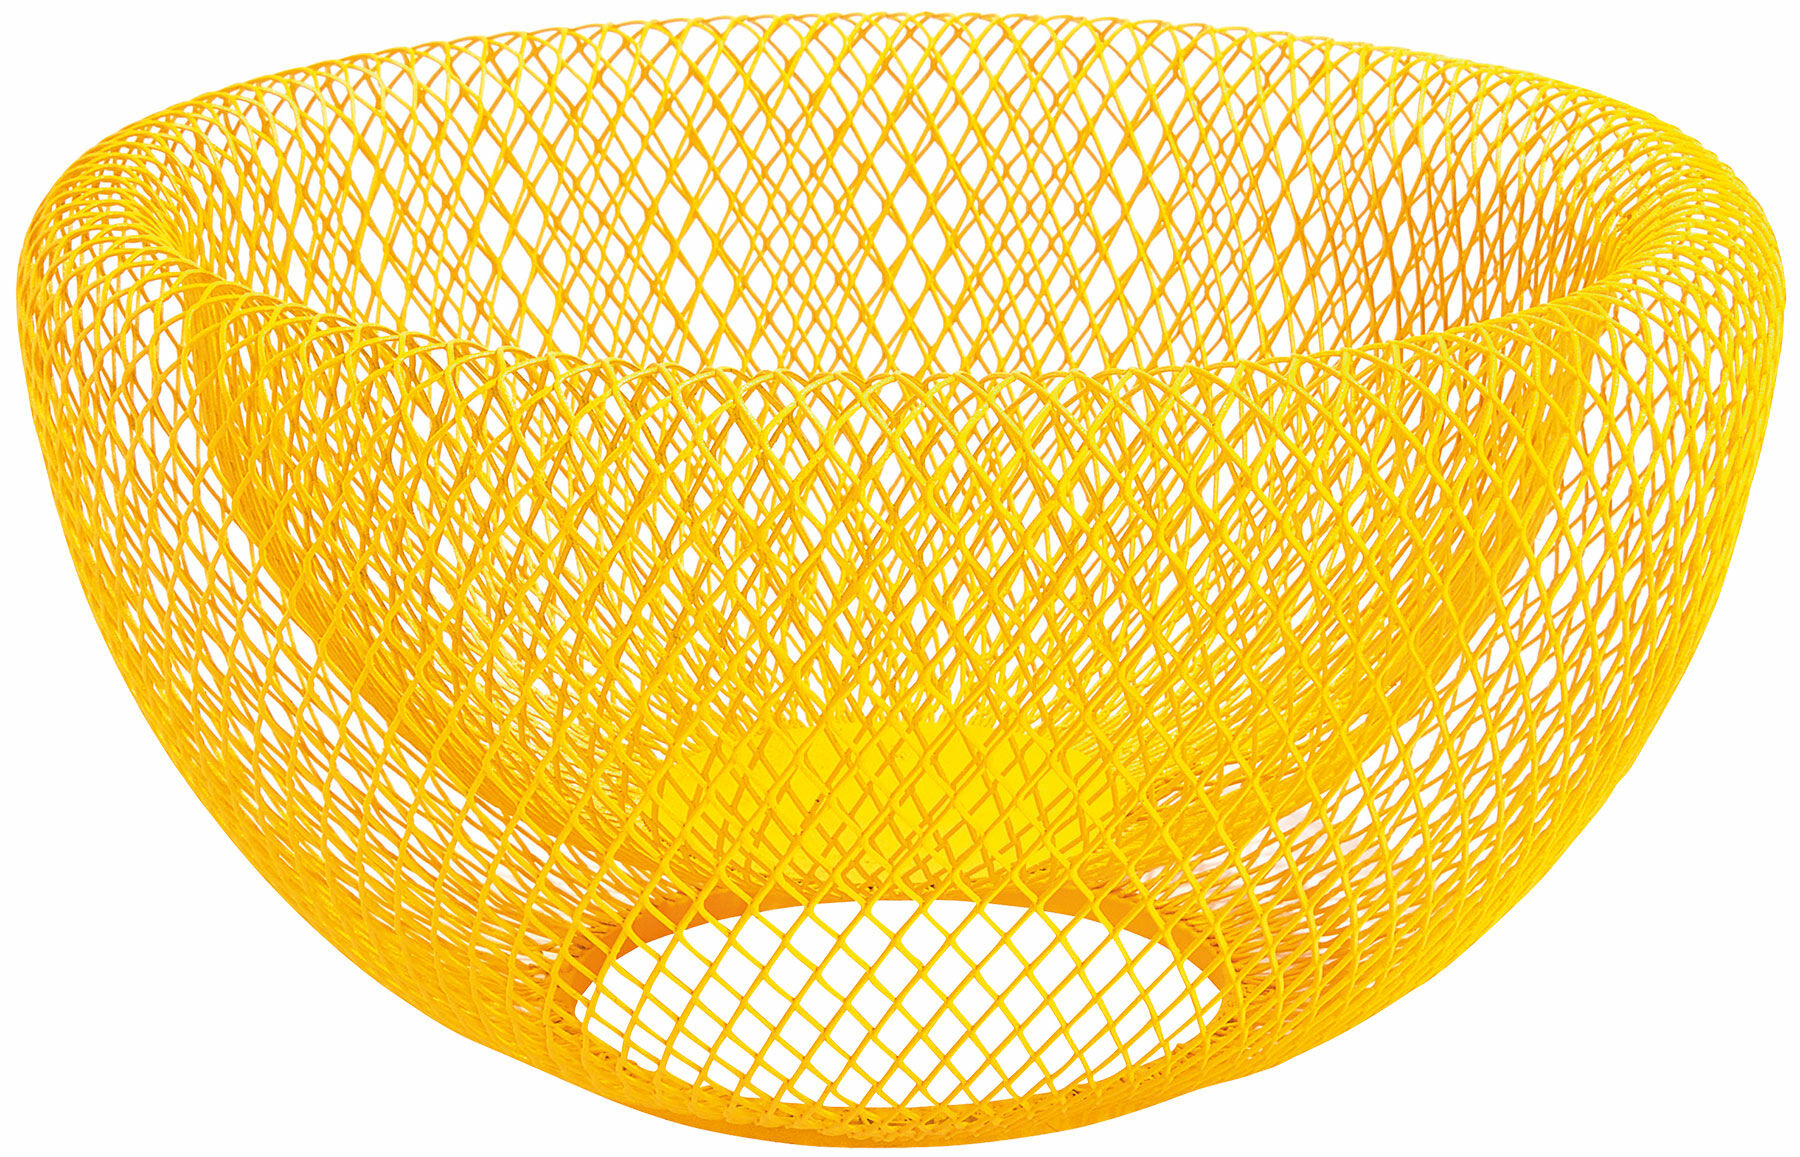 Fruit bowl "Mesh", yellow version - MoMA Collection